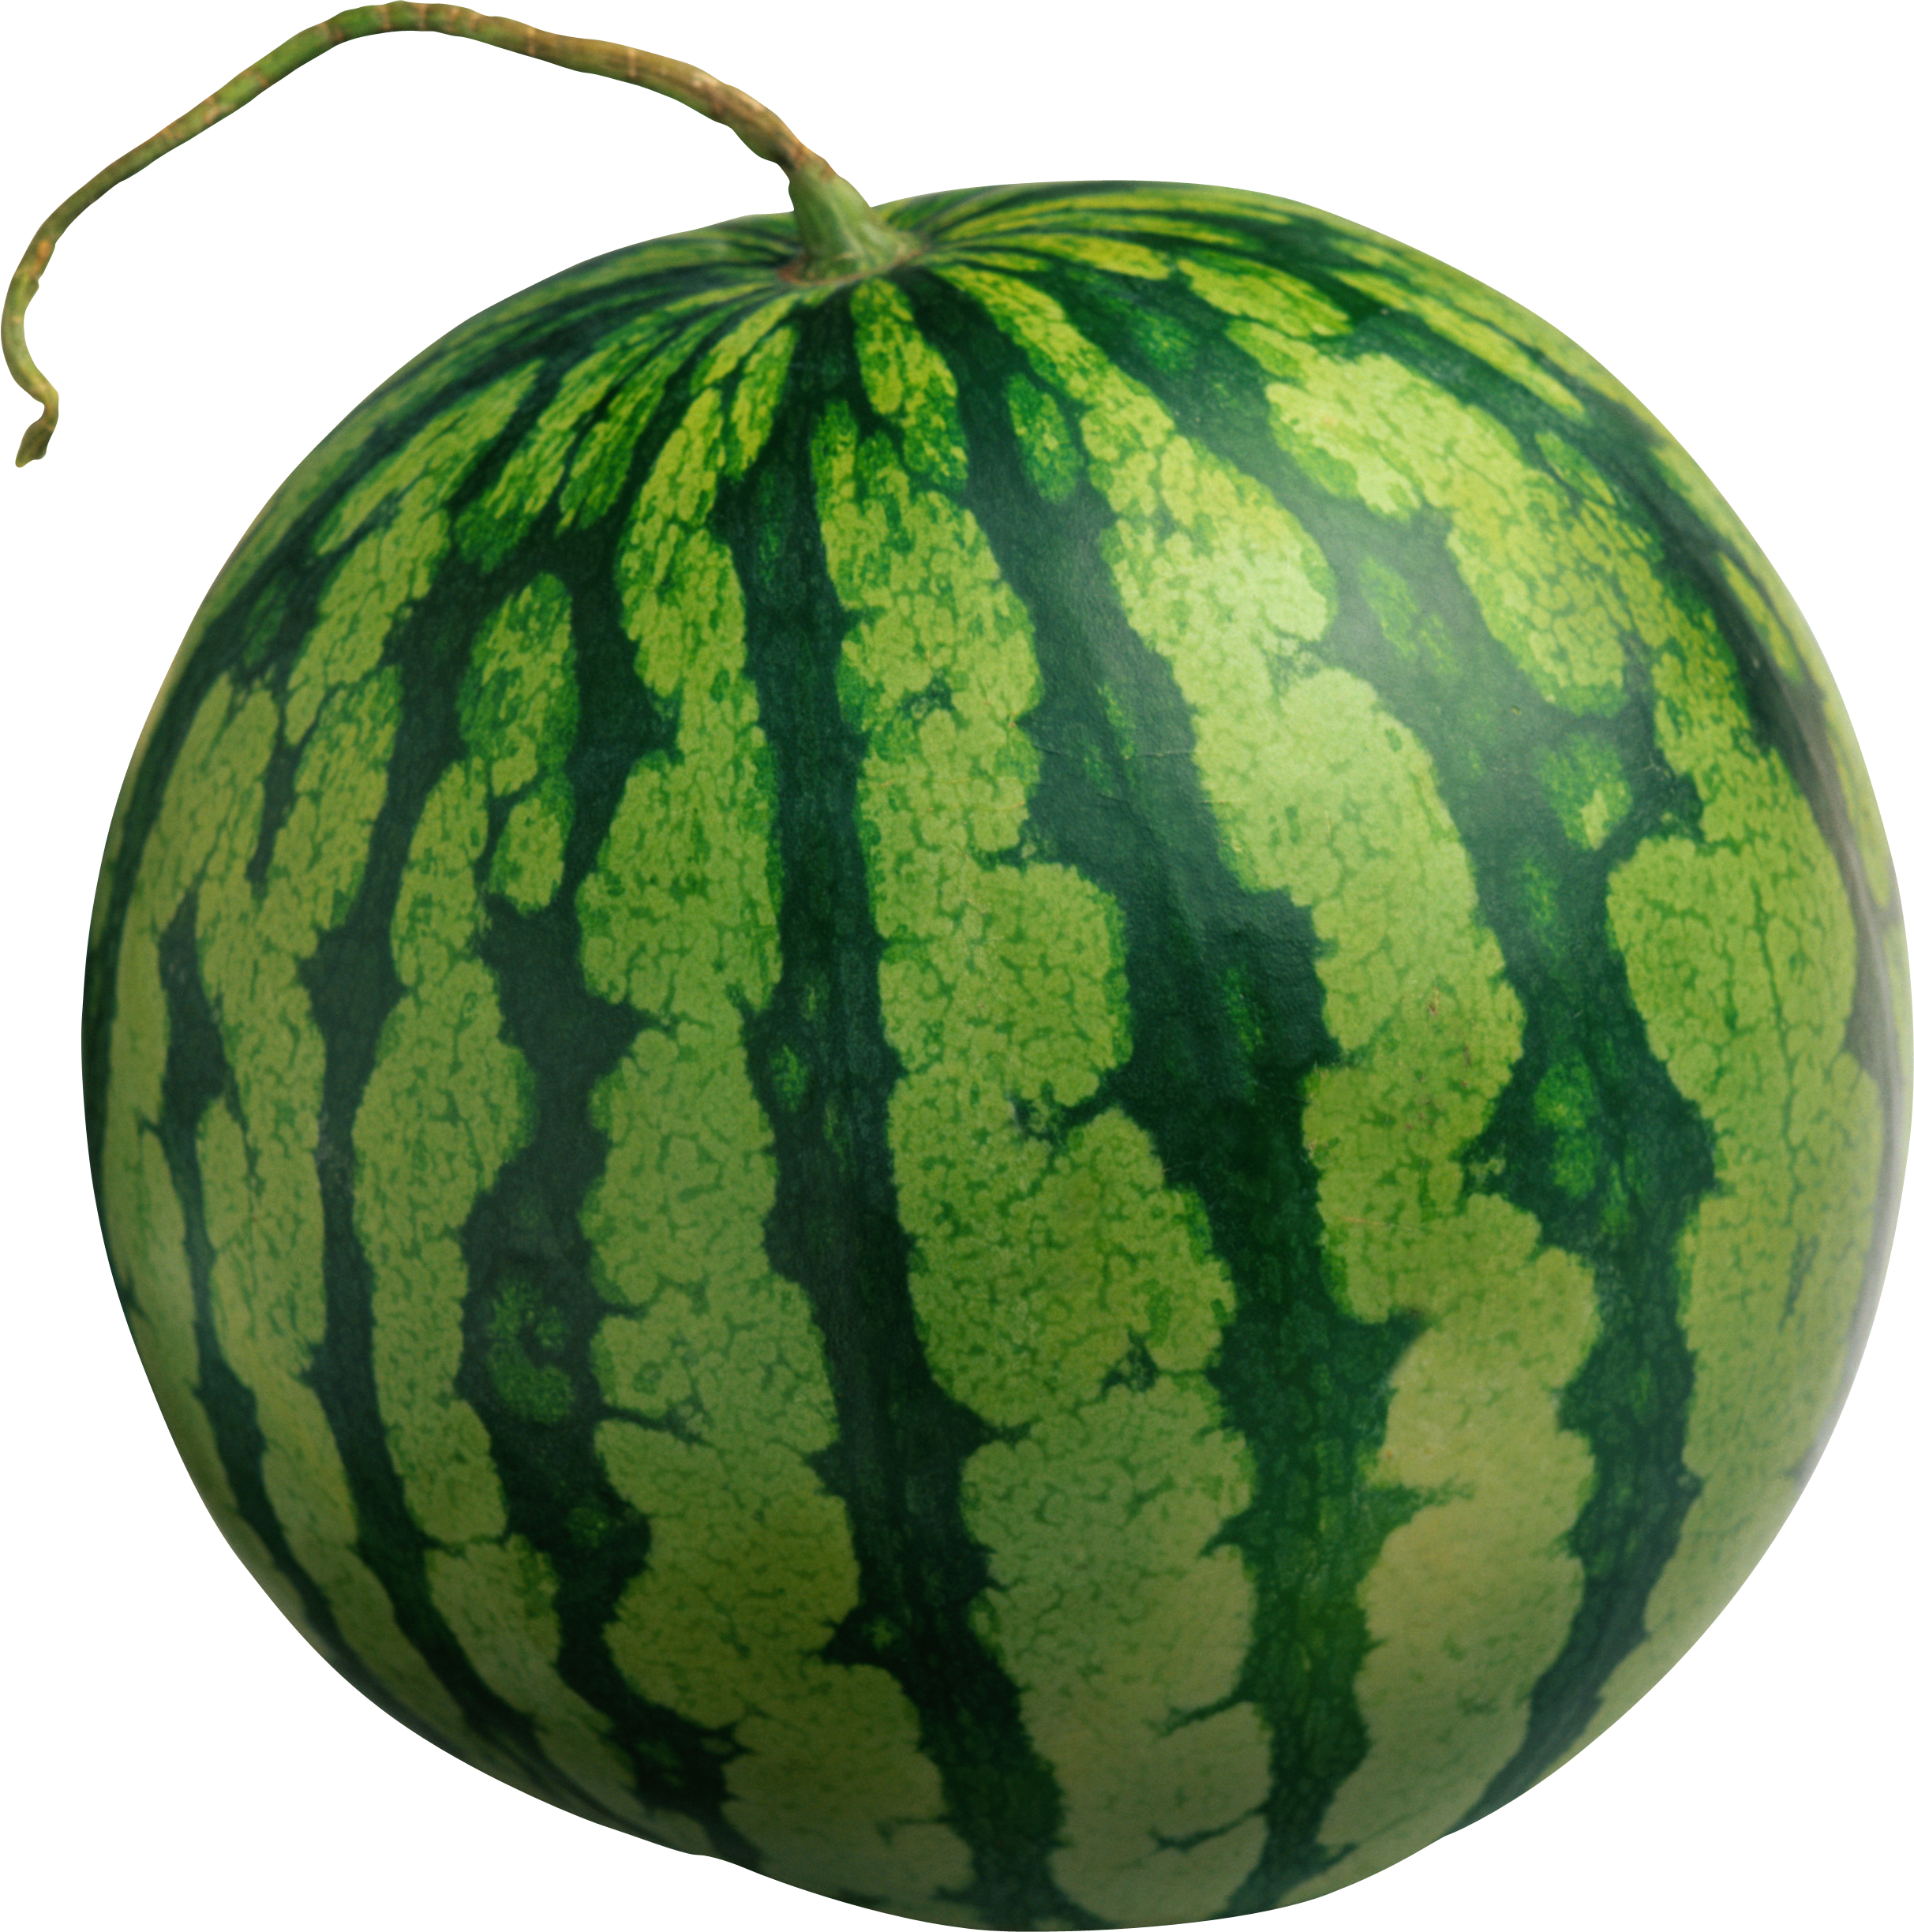 Watermelon Png Image - Watermelon, Transparent background PNG HD thumbnail